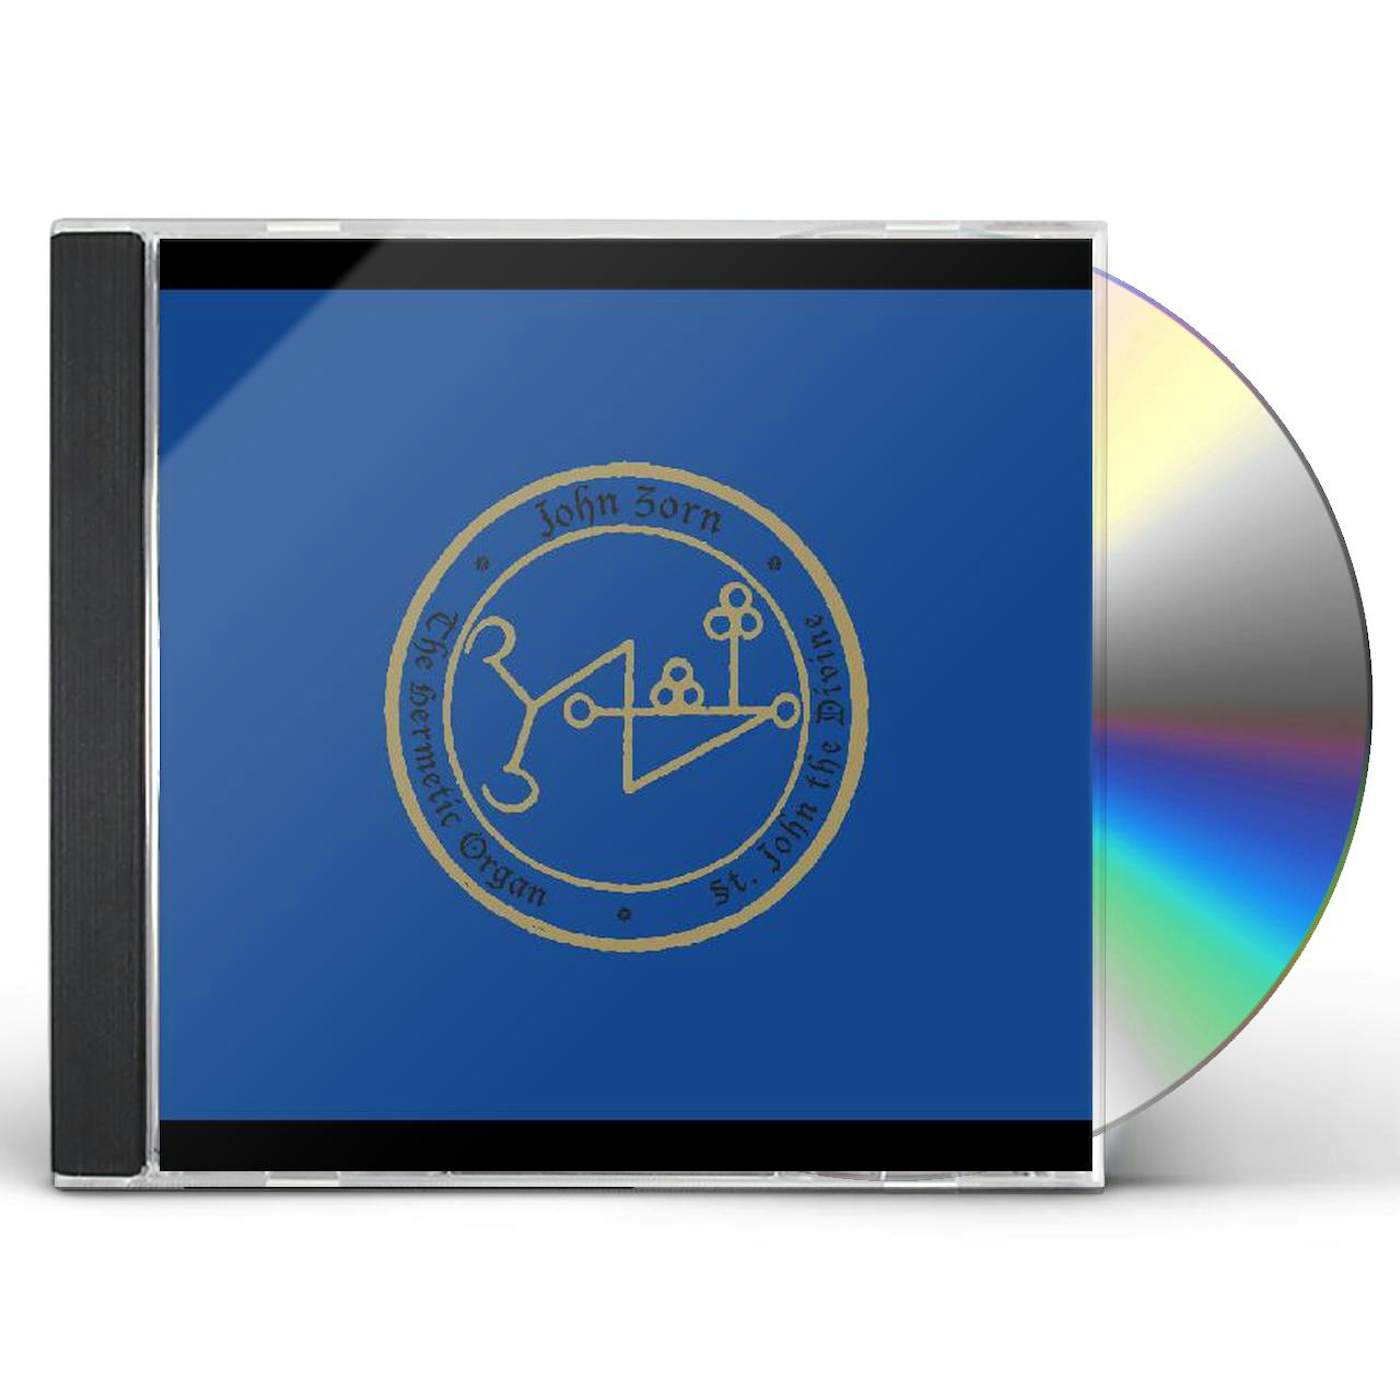 John Zorn 16140 HERMETIC ORGAN VOL. 7 - ST. JOHN THE DIVINE 2019 CD